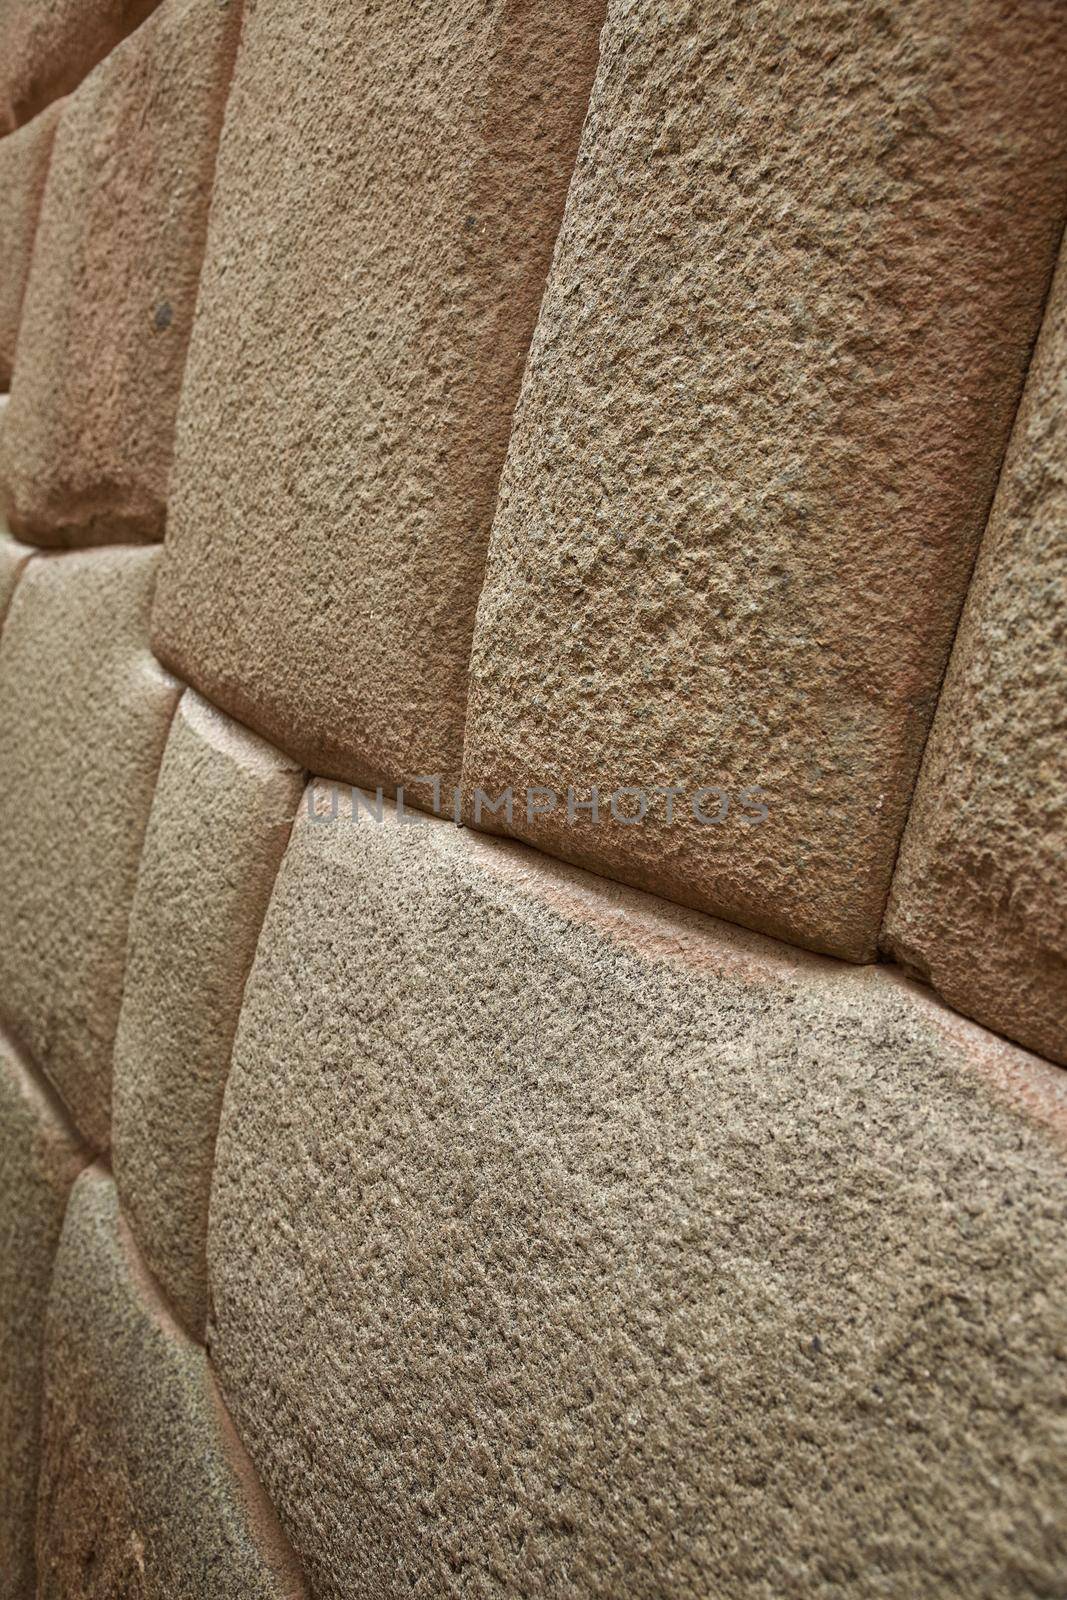 Detail of Inca wall in city of Cusco in Peru by wondry